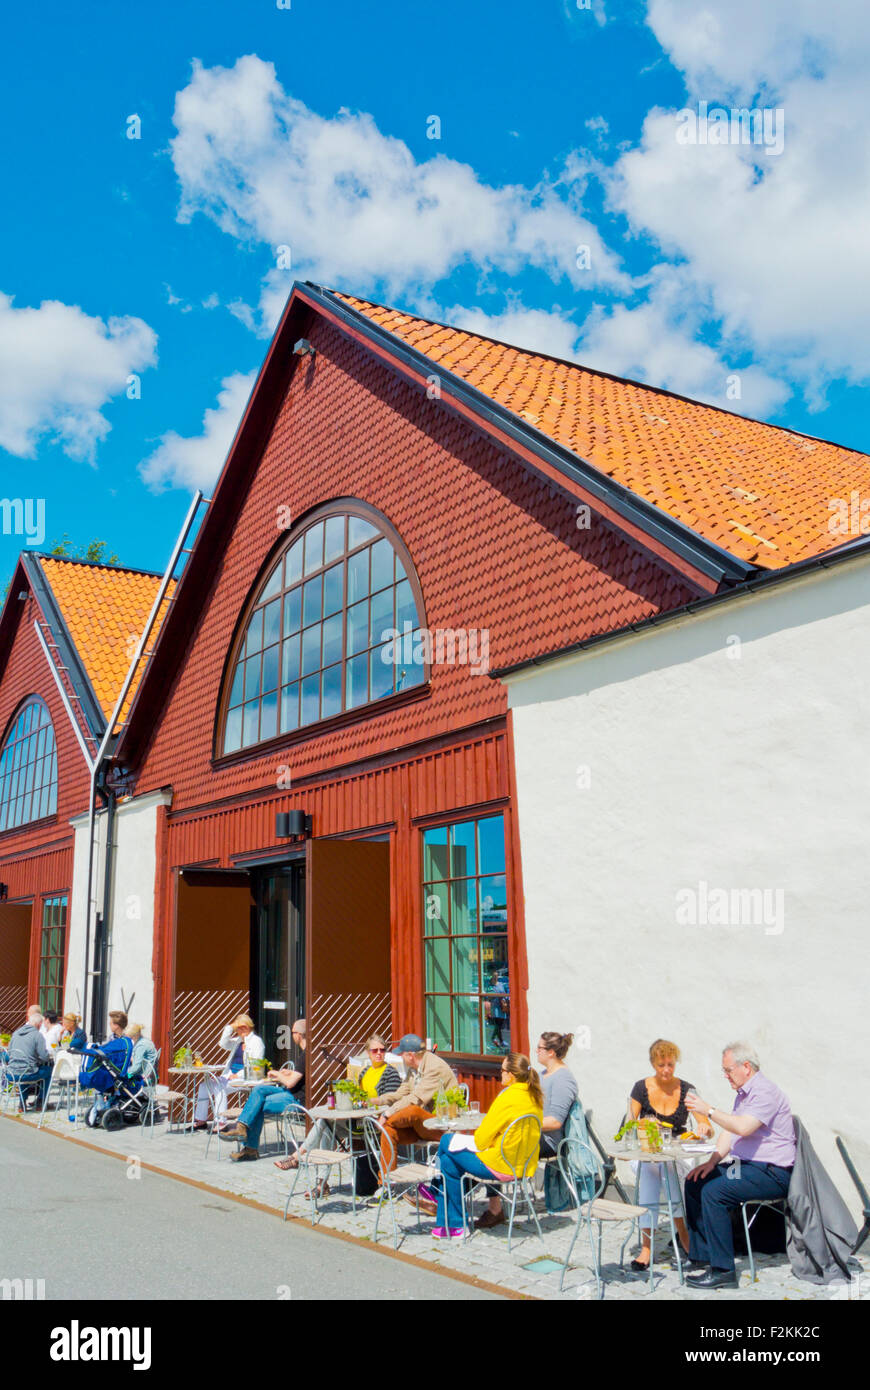 Cafe terrace, Spritmuseum, alcohol museum, Djurgården island, Stockholm, Sweden Stock Photo